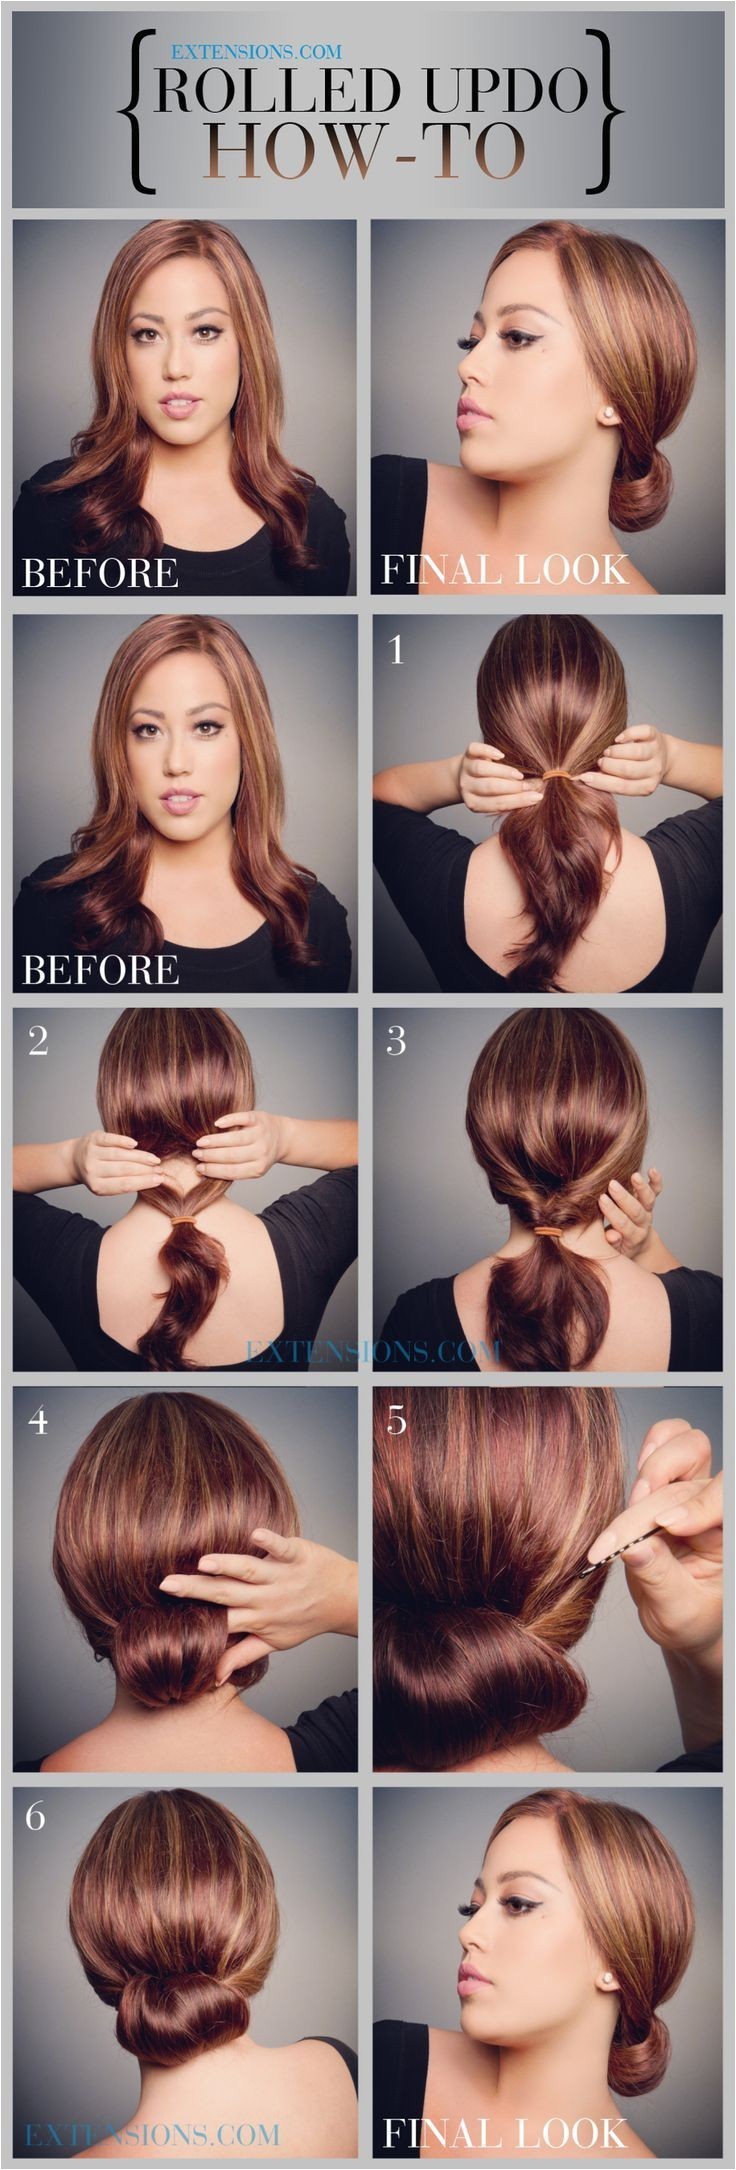 12 trendy low bun updo hairstyles tutorials